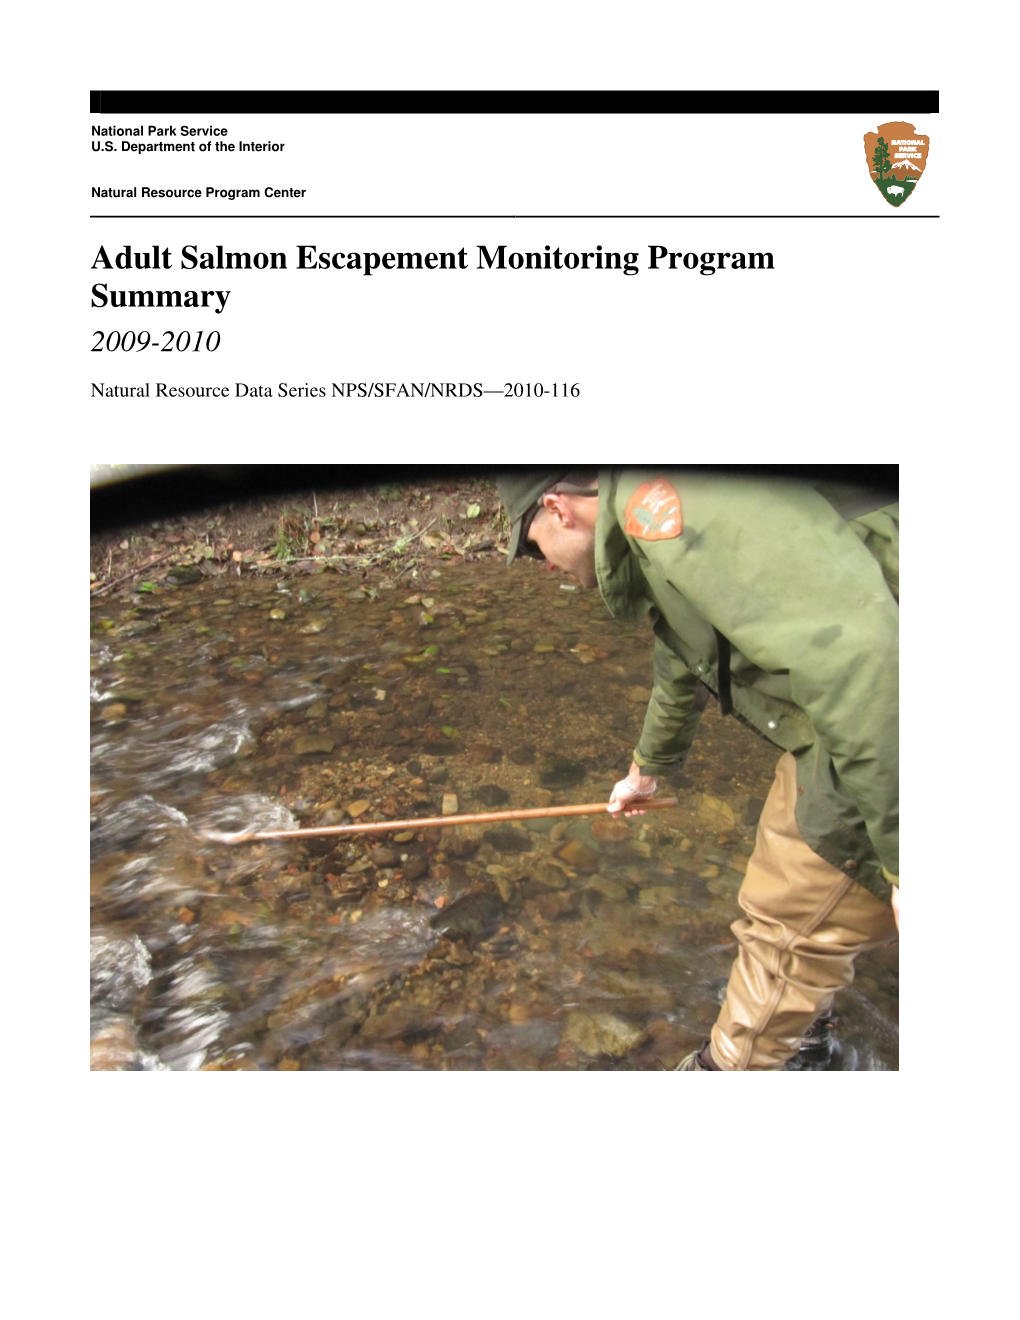 Adult Salmon Escapement Monitoring Program Summary 2009-2010